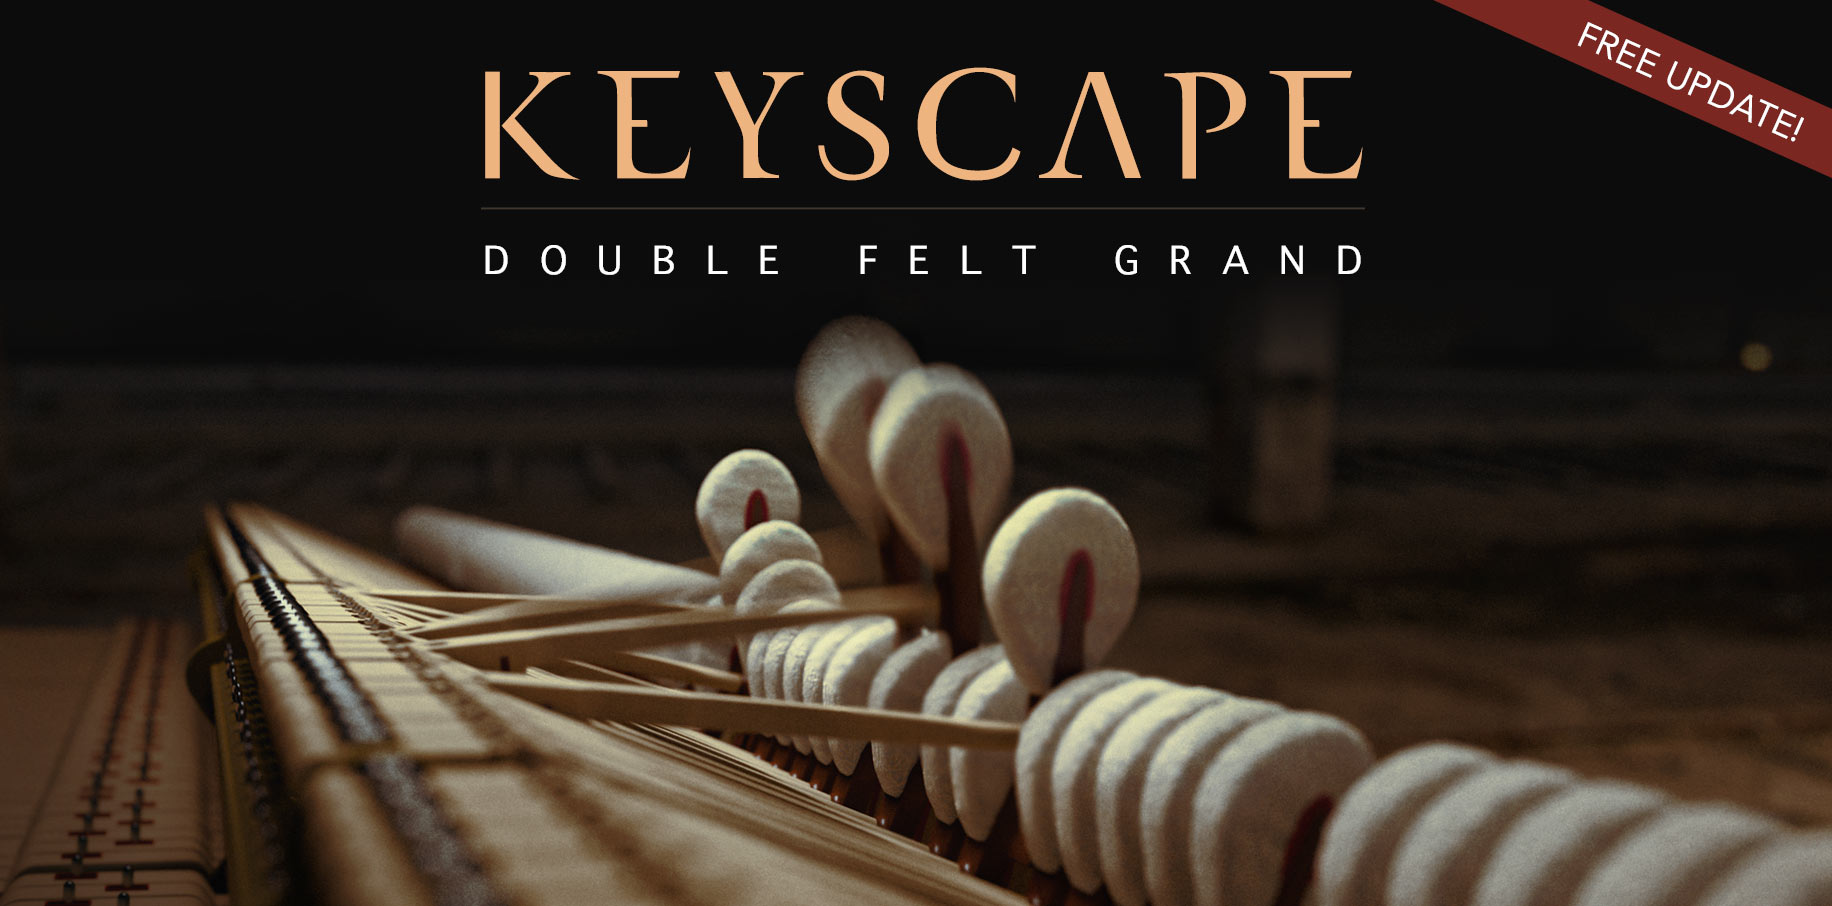 New Double Felt Grand for Keyscape